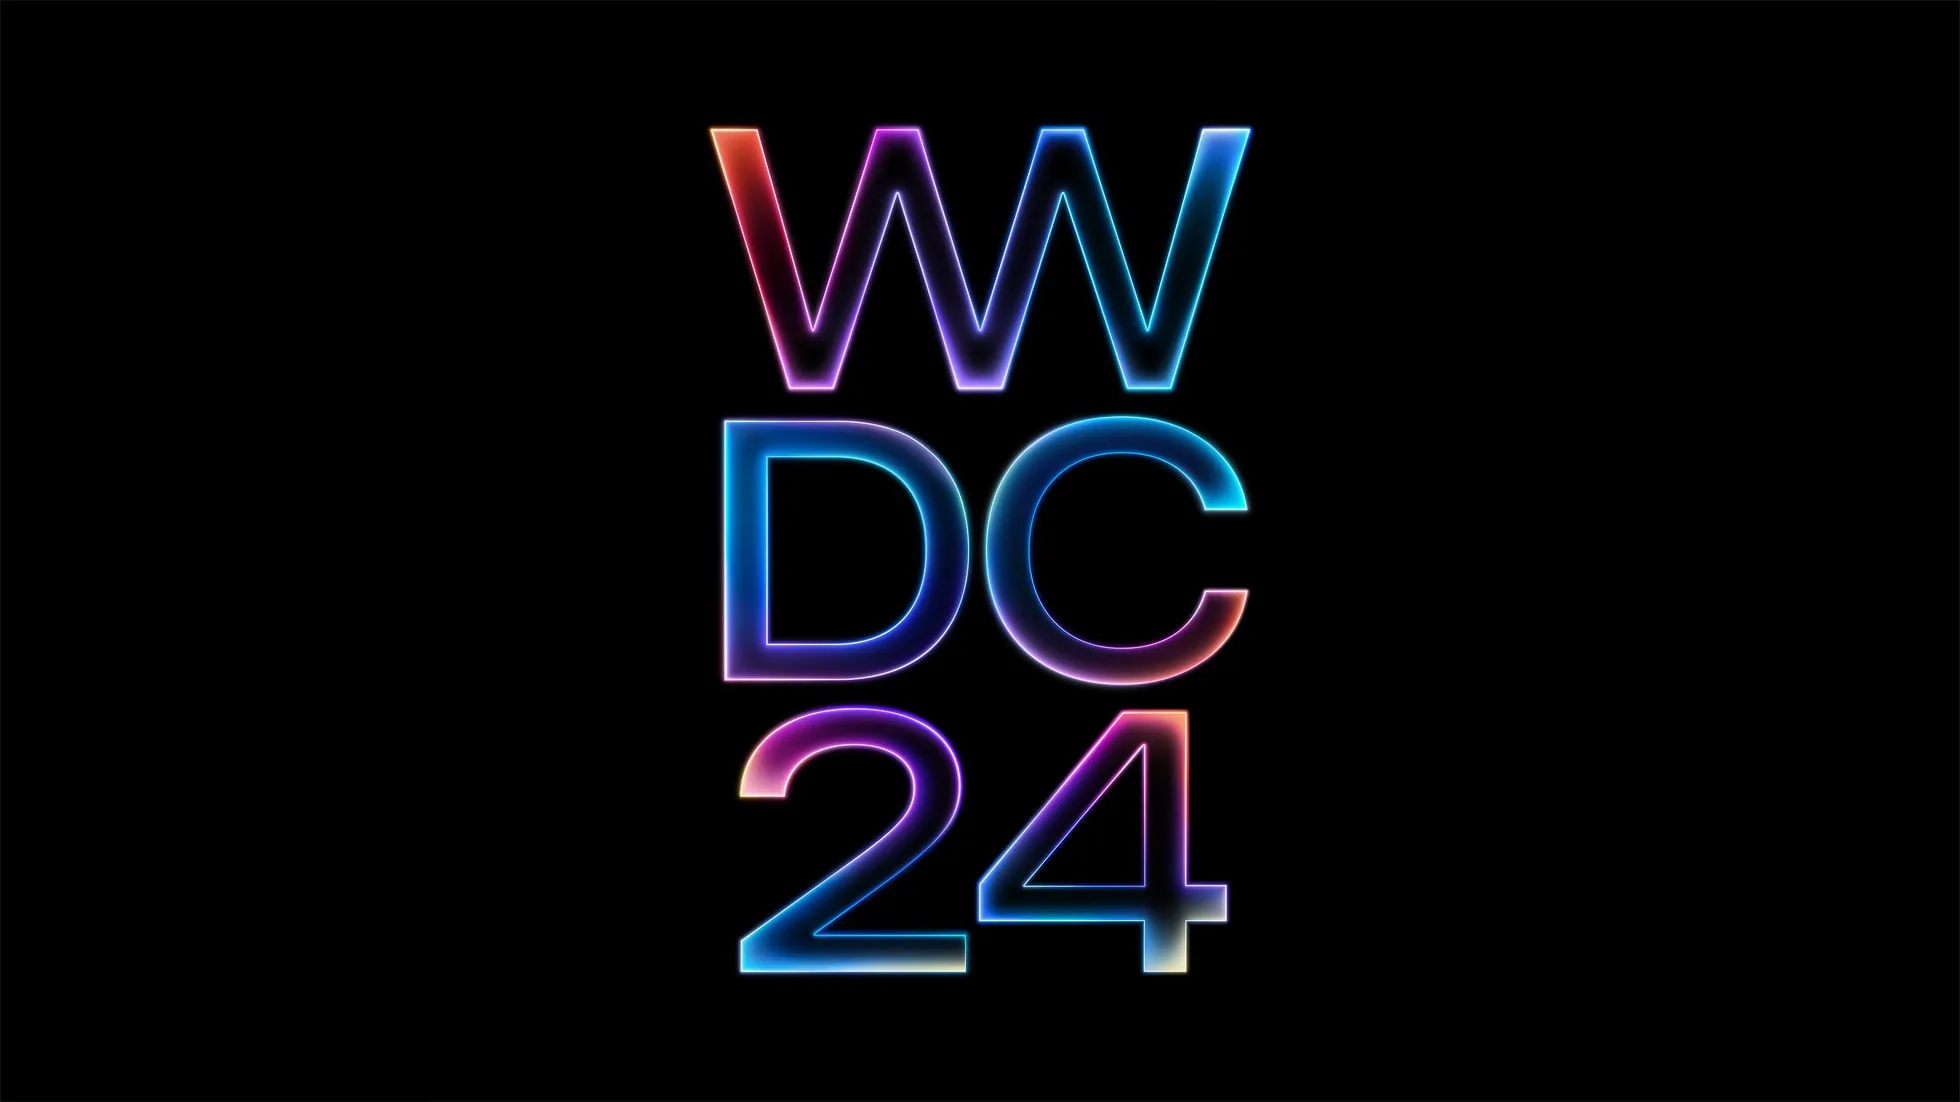 Apple WWDC24 event announcement jpg